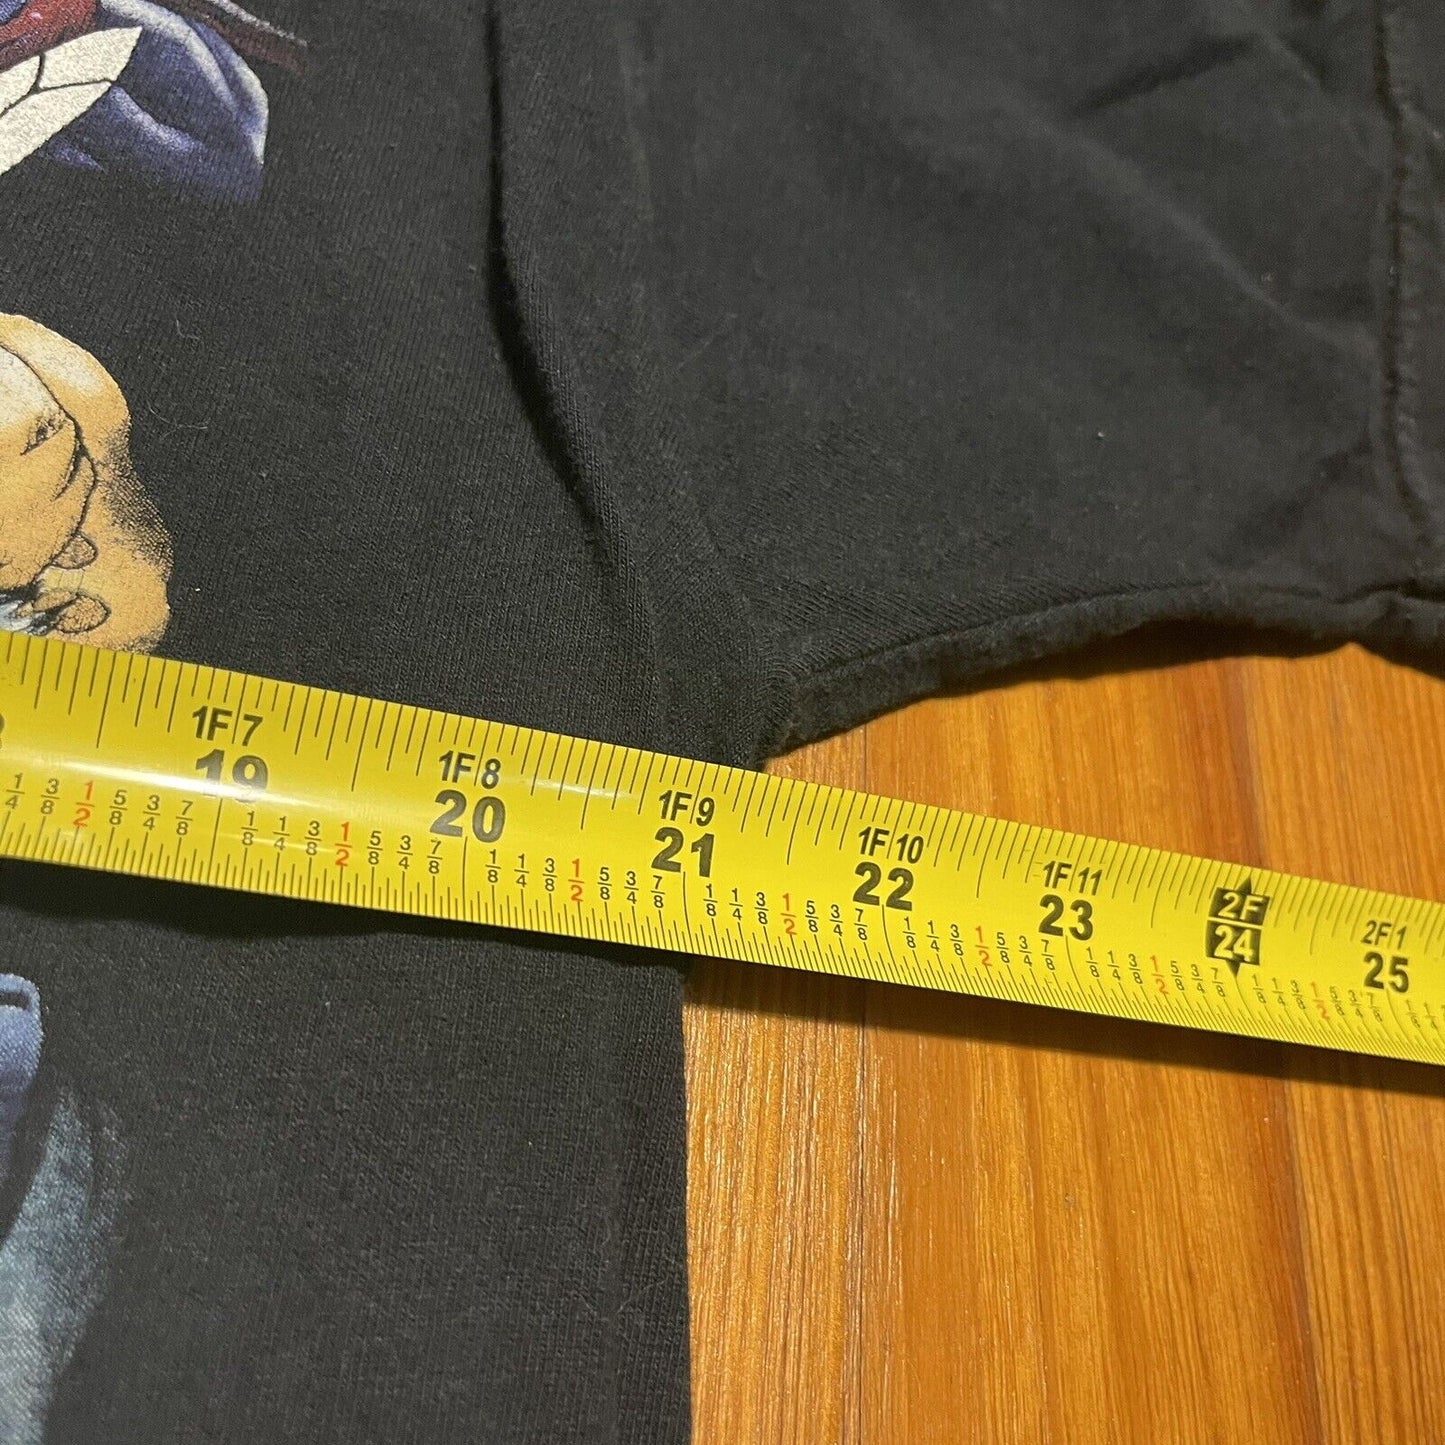 Thundercats Group Photo Print T-Shirt Delta Tag Unisex Adult Size XL